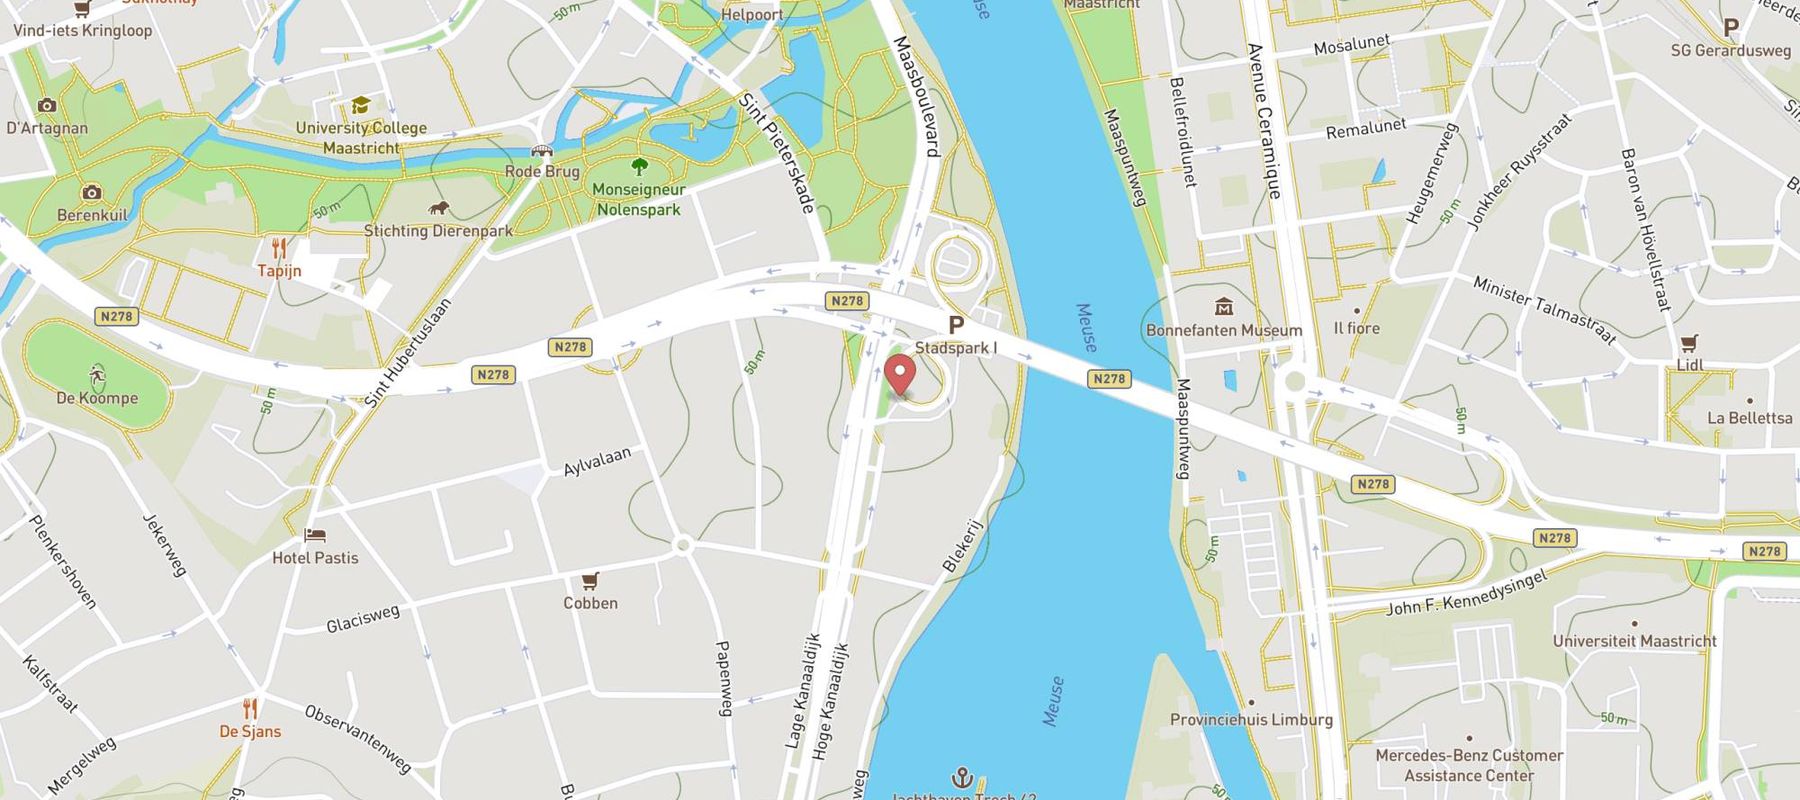 Q-Park Stadspark III map